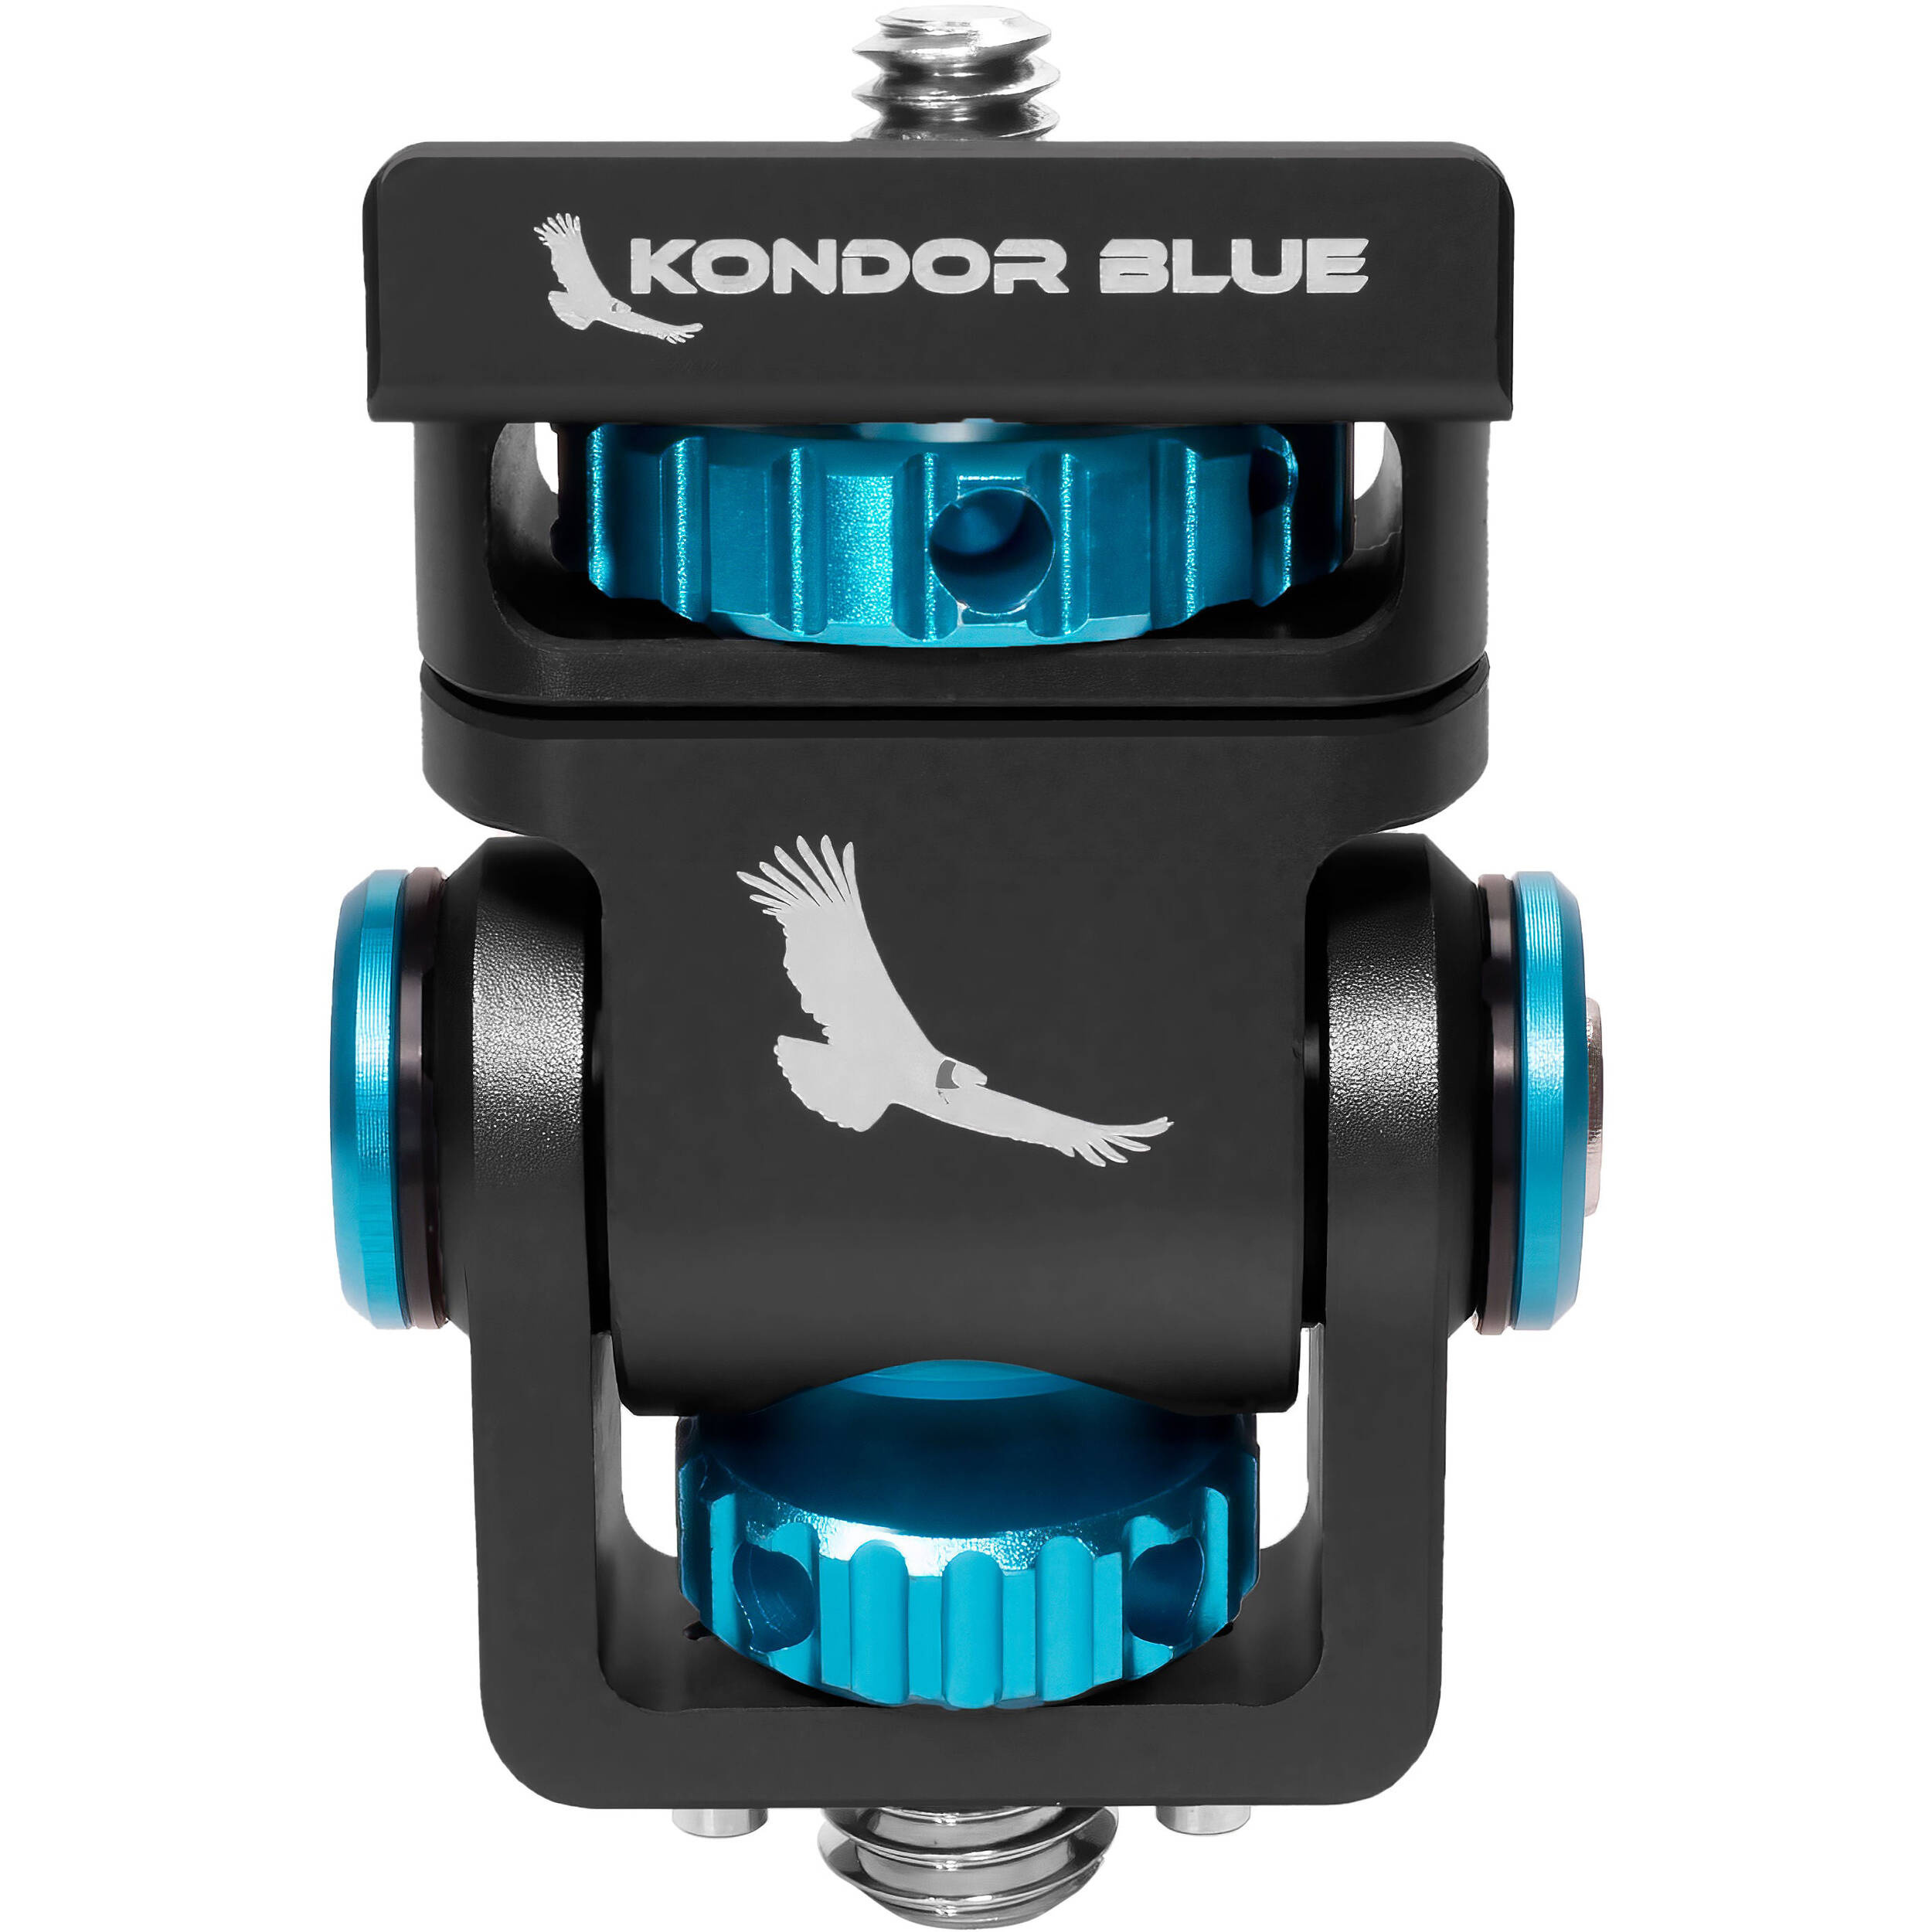 Kondor Blue Swivel and Tilt Monitor Mount with ARRI-Style Mount (Raven Black)